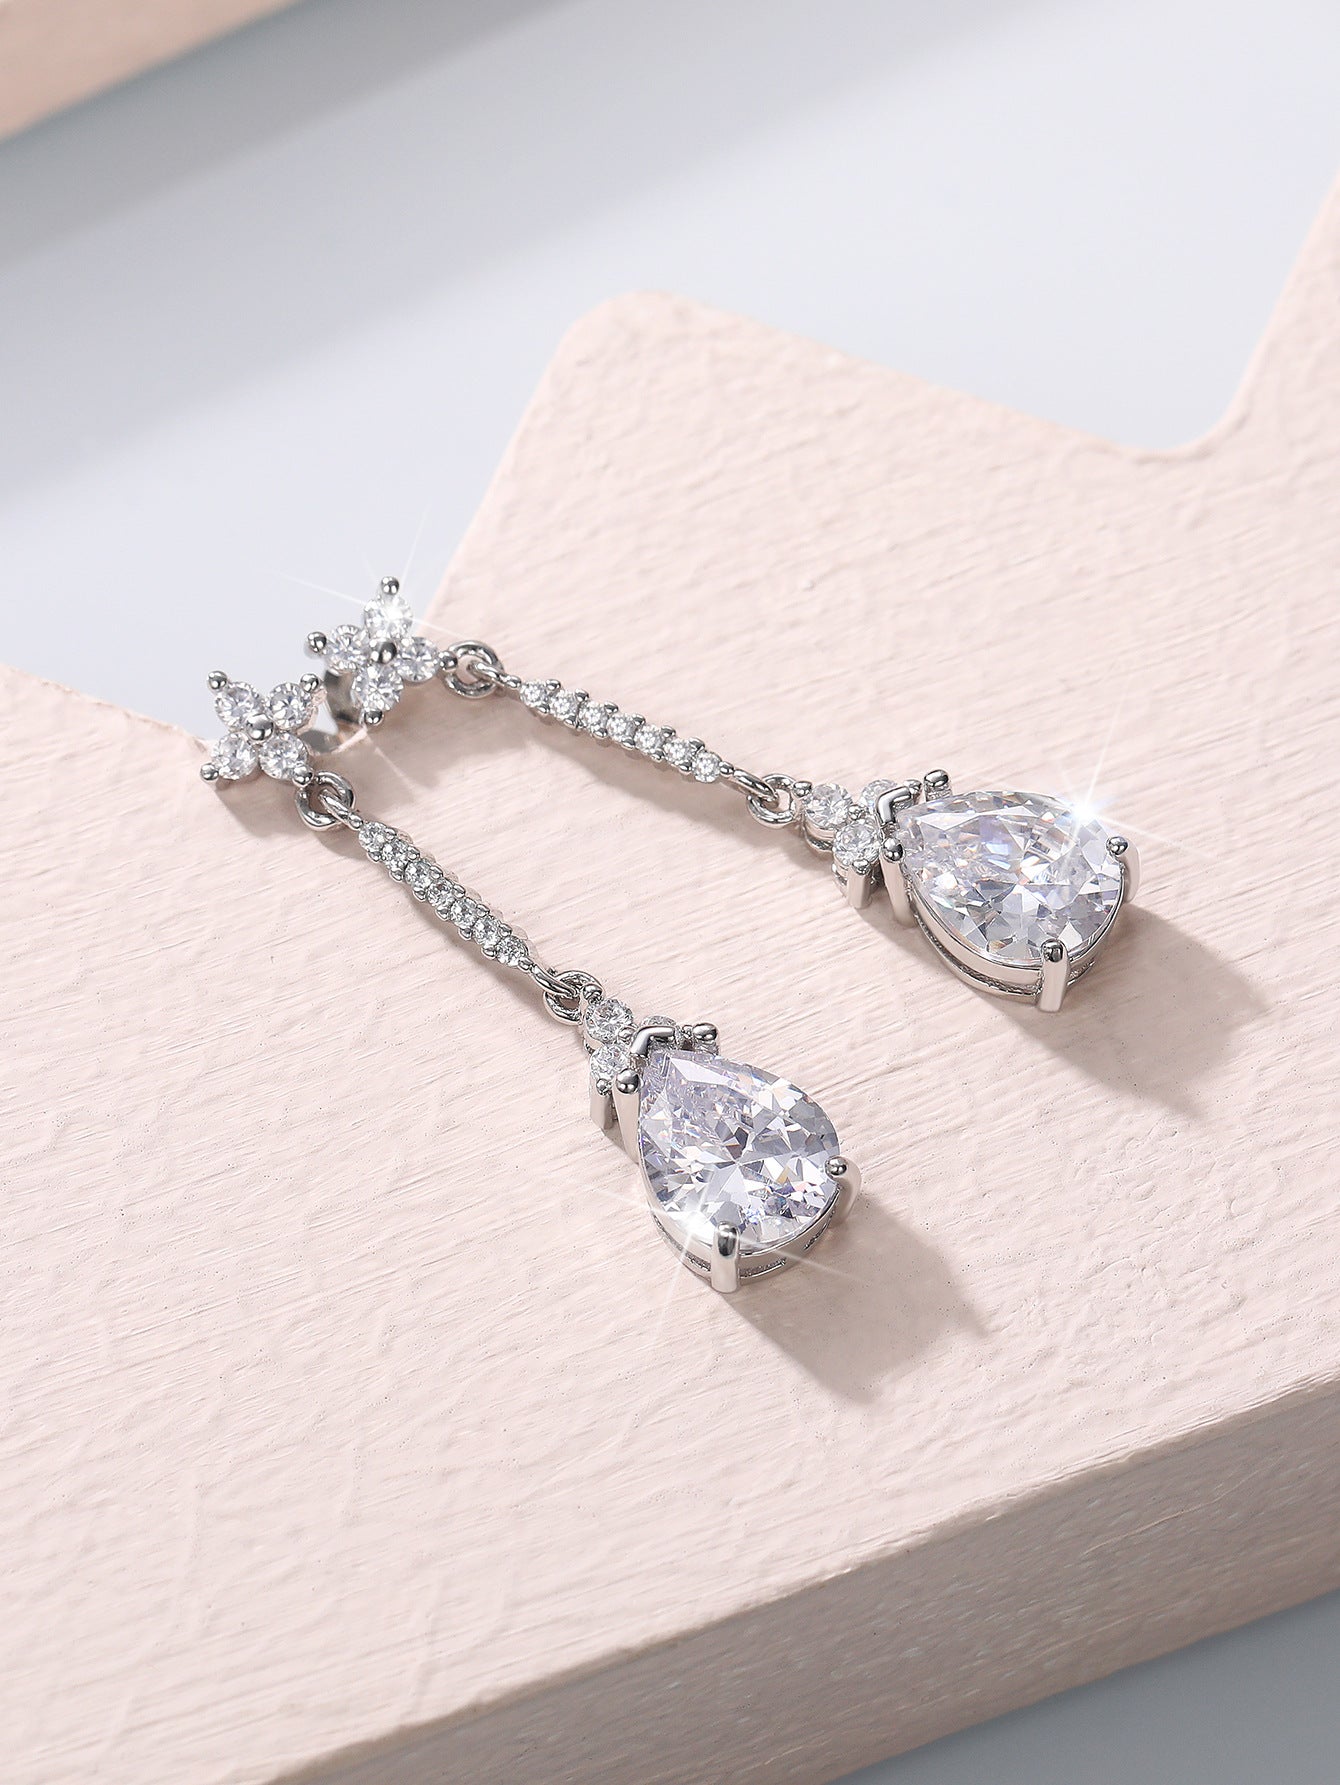 47.Shiny 3A white zircon pear-shaped water drop earrings for women, popular temperament versatile and elegant earrings